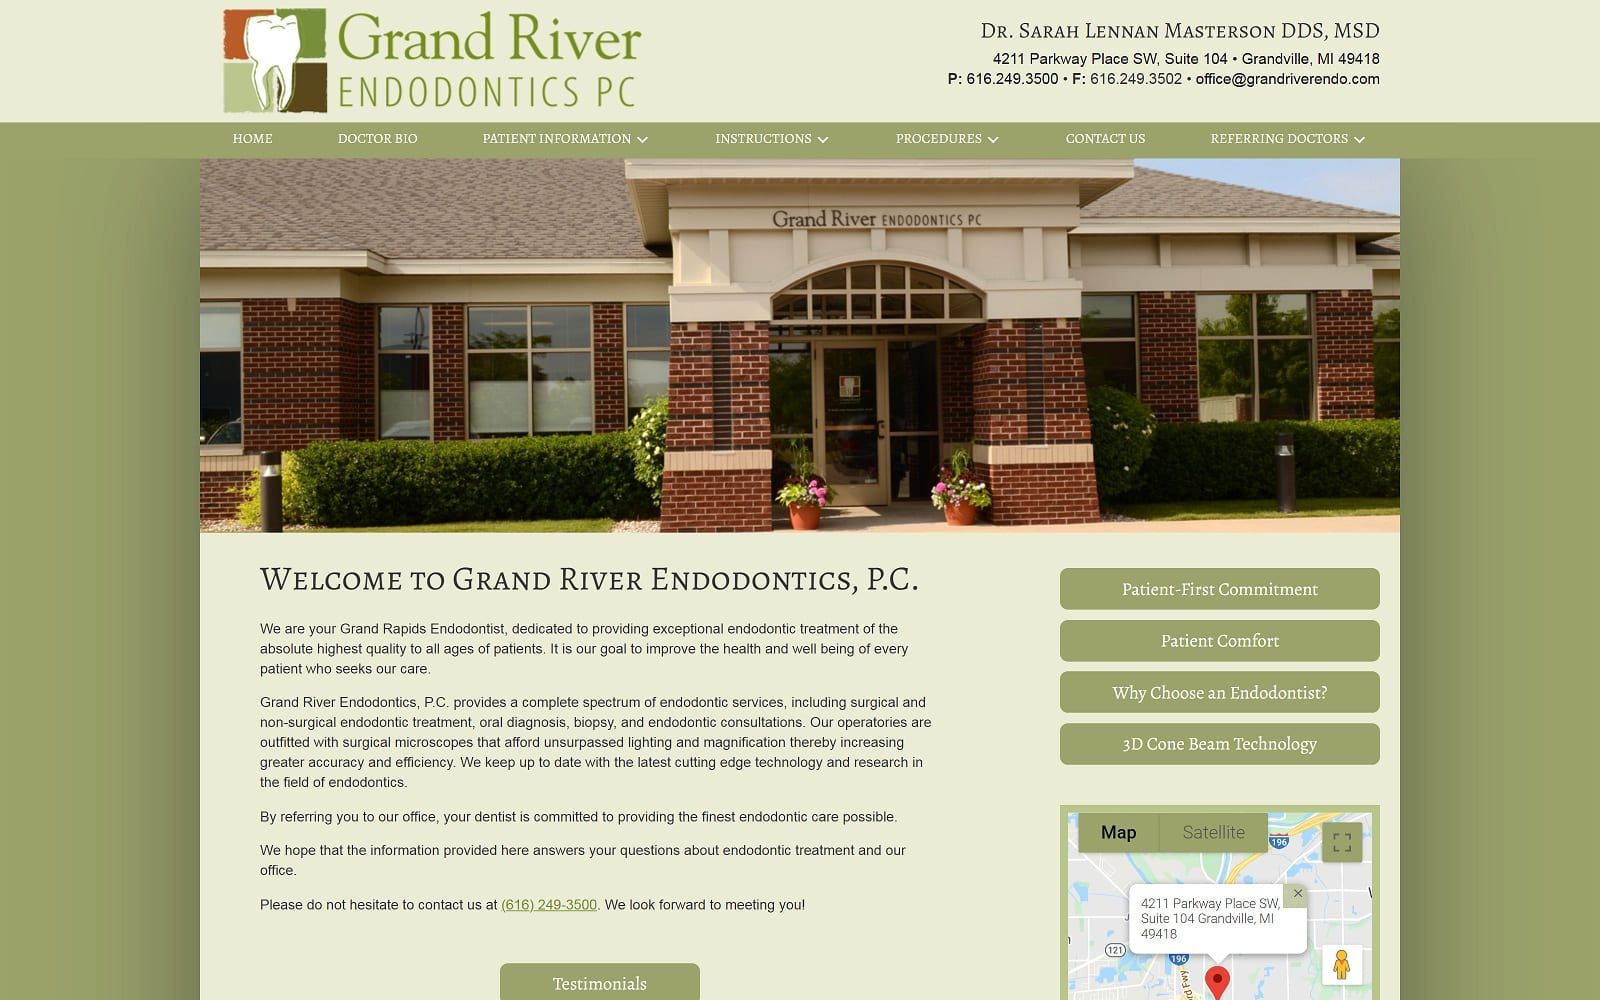 The screenshot of grand river endodontics / endodontists grandville mi grandriverendodontics. Com website